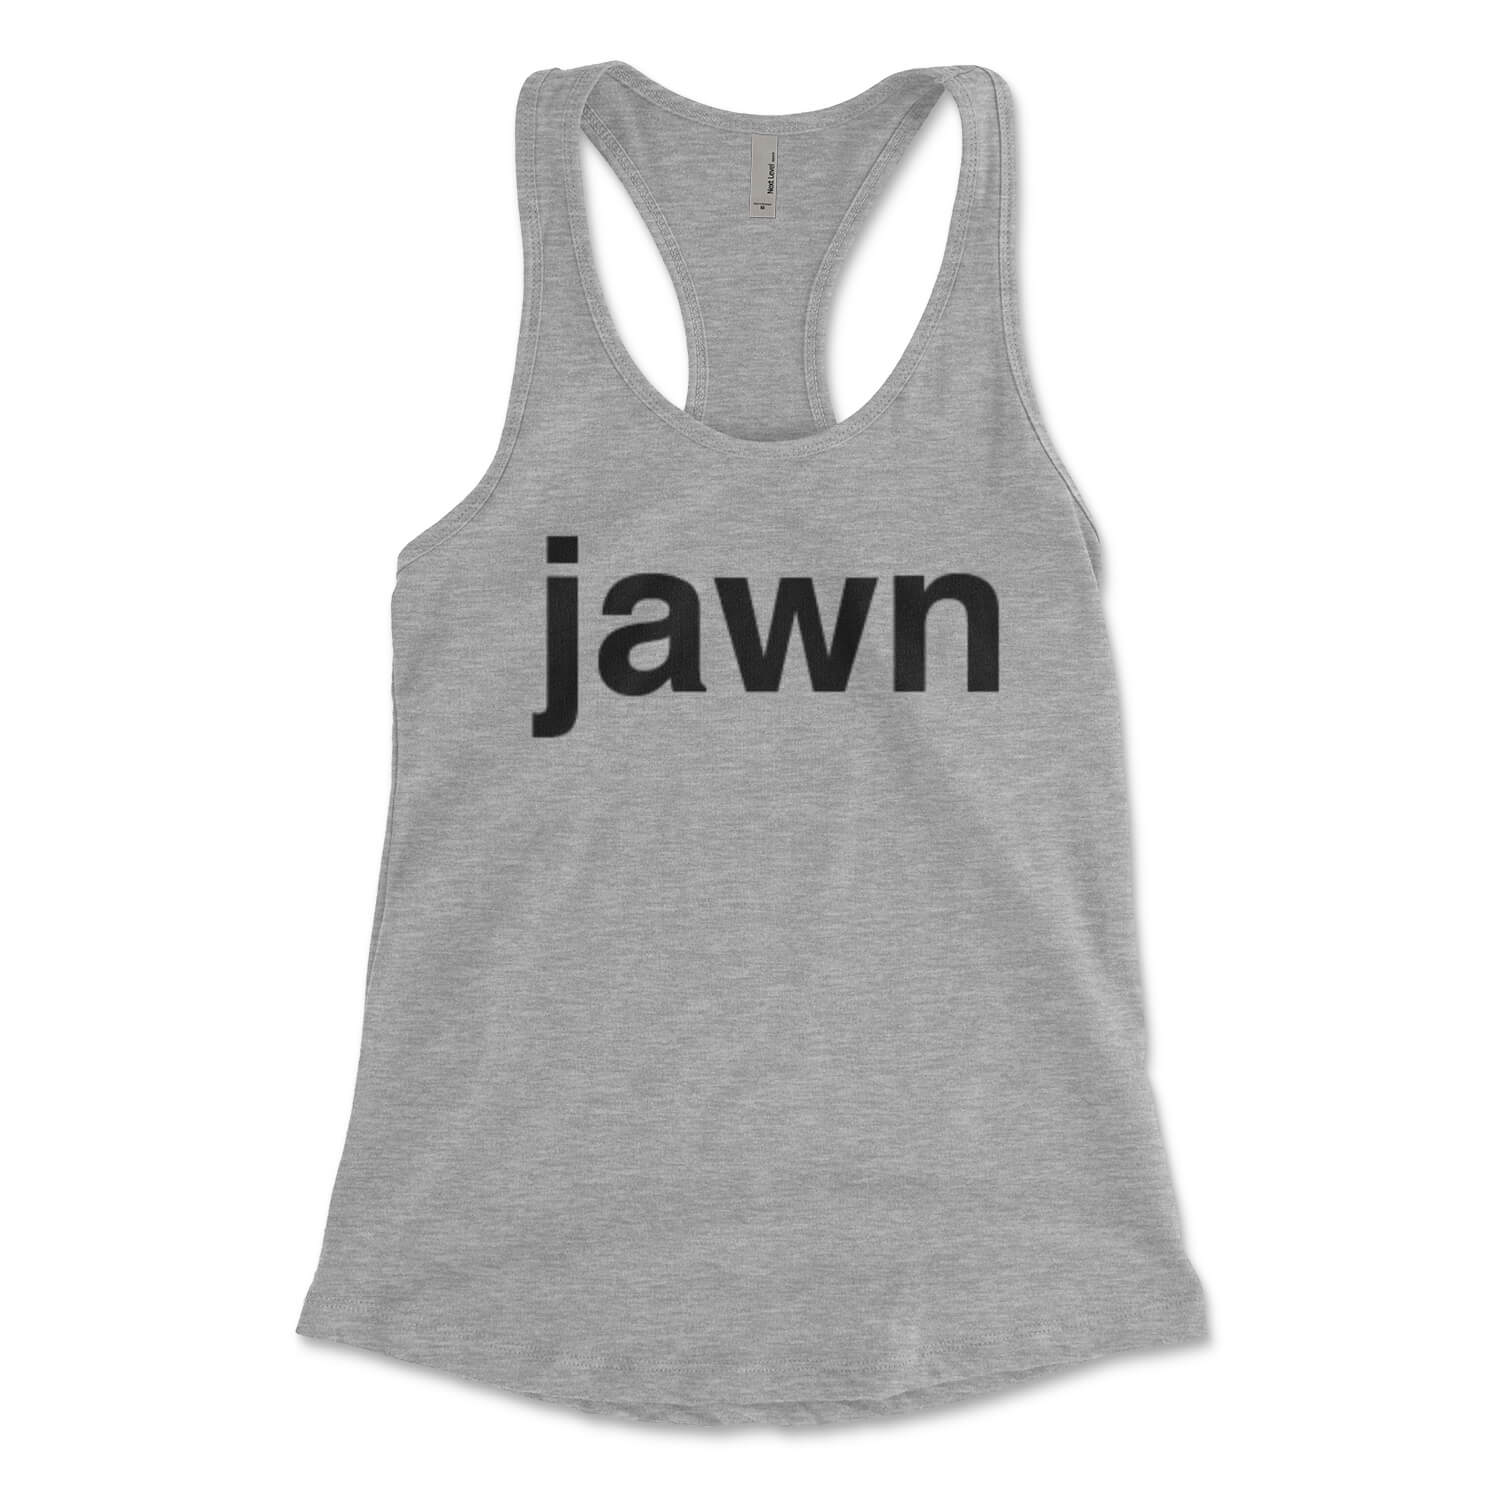 Jawn Philadelphia slang gift birthday' Men's Premium Tank Top